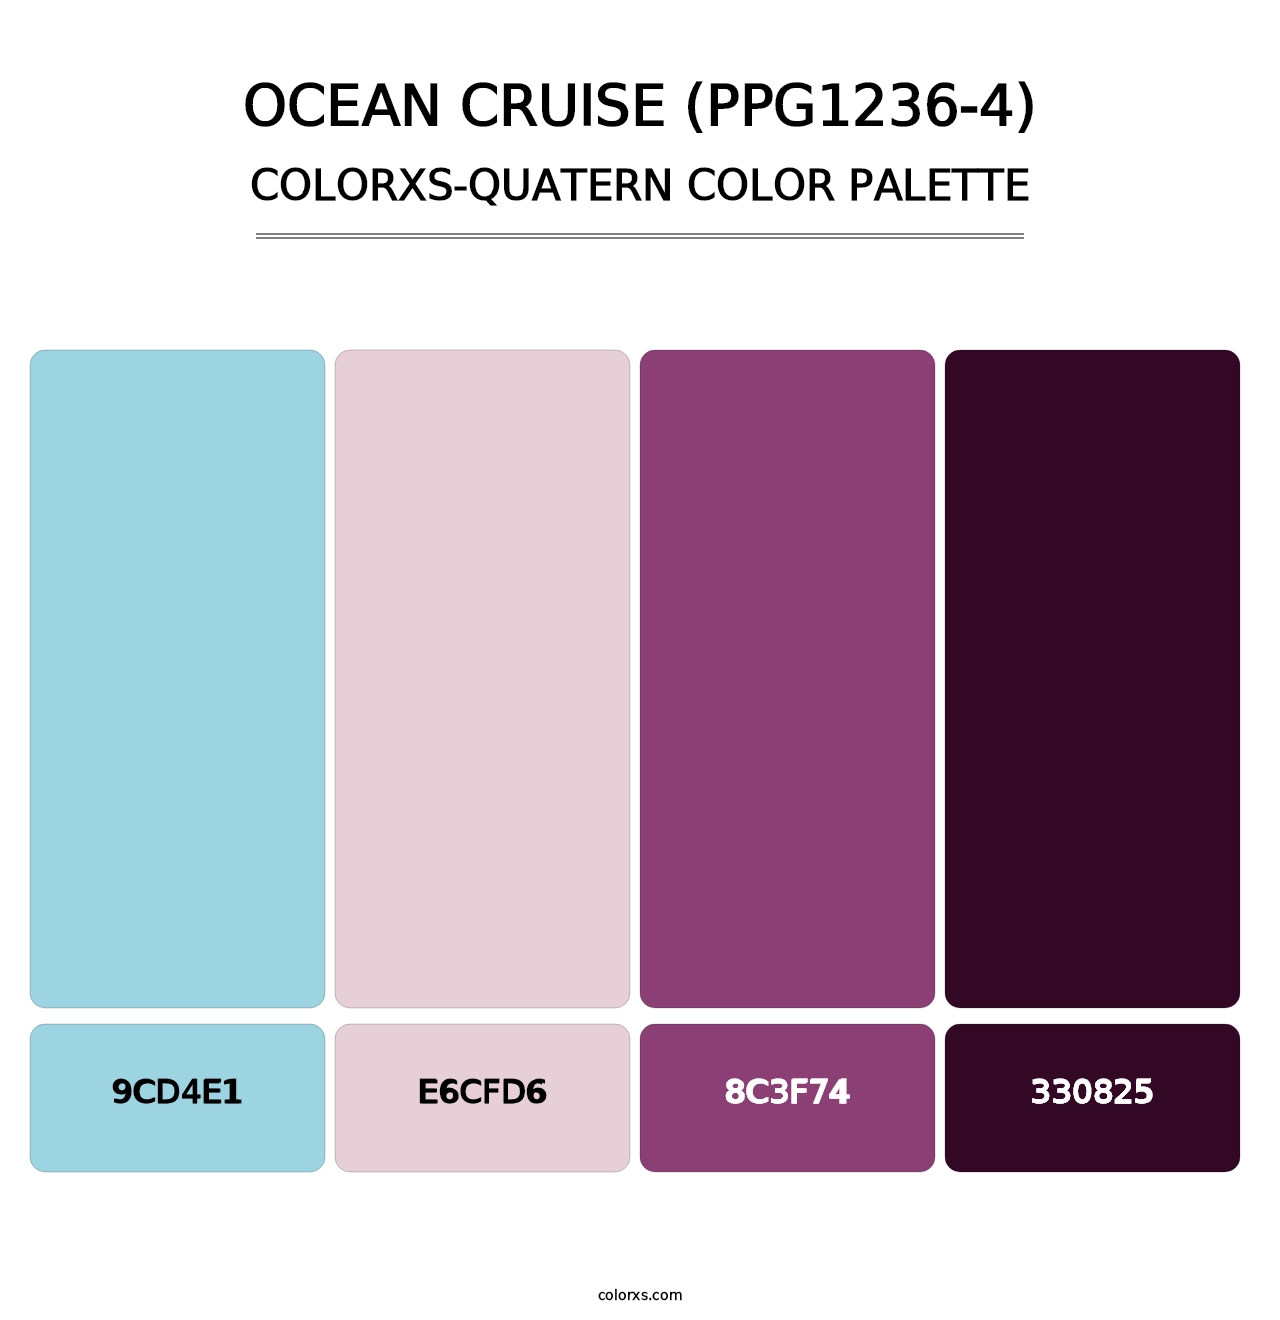 Ocean Cruise (PPG1236-4) - Colorxs Quatern Palette